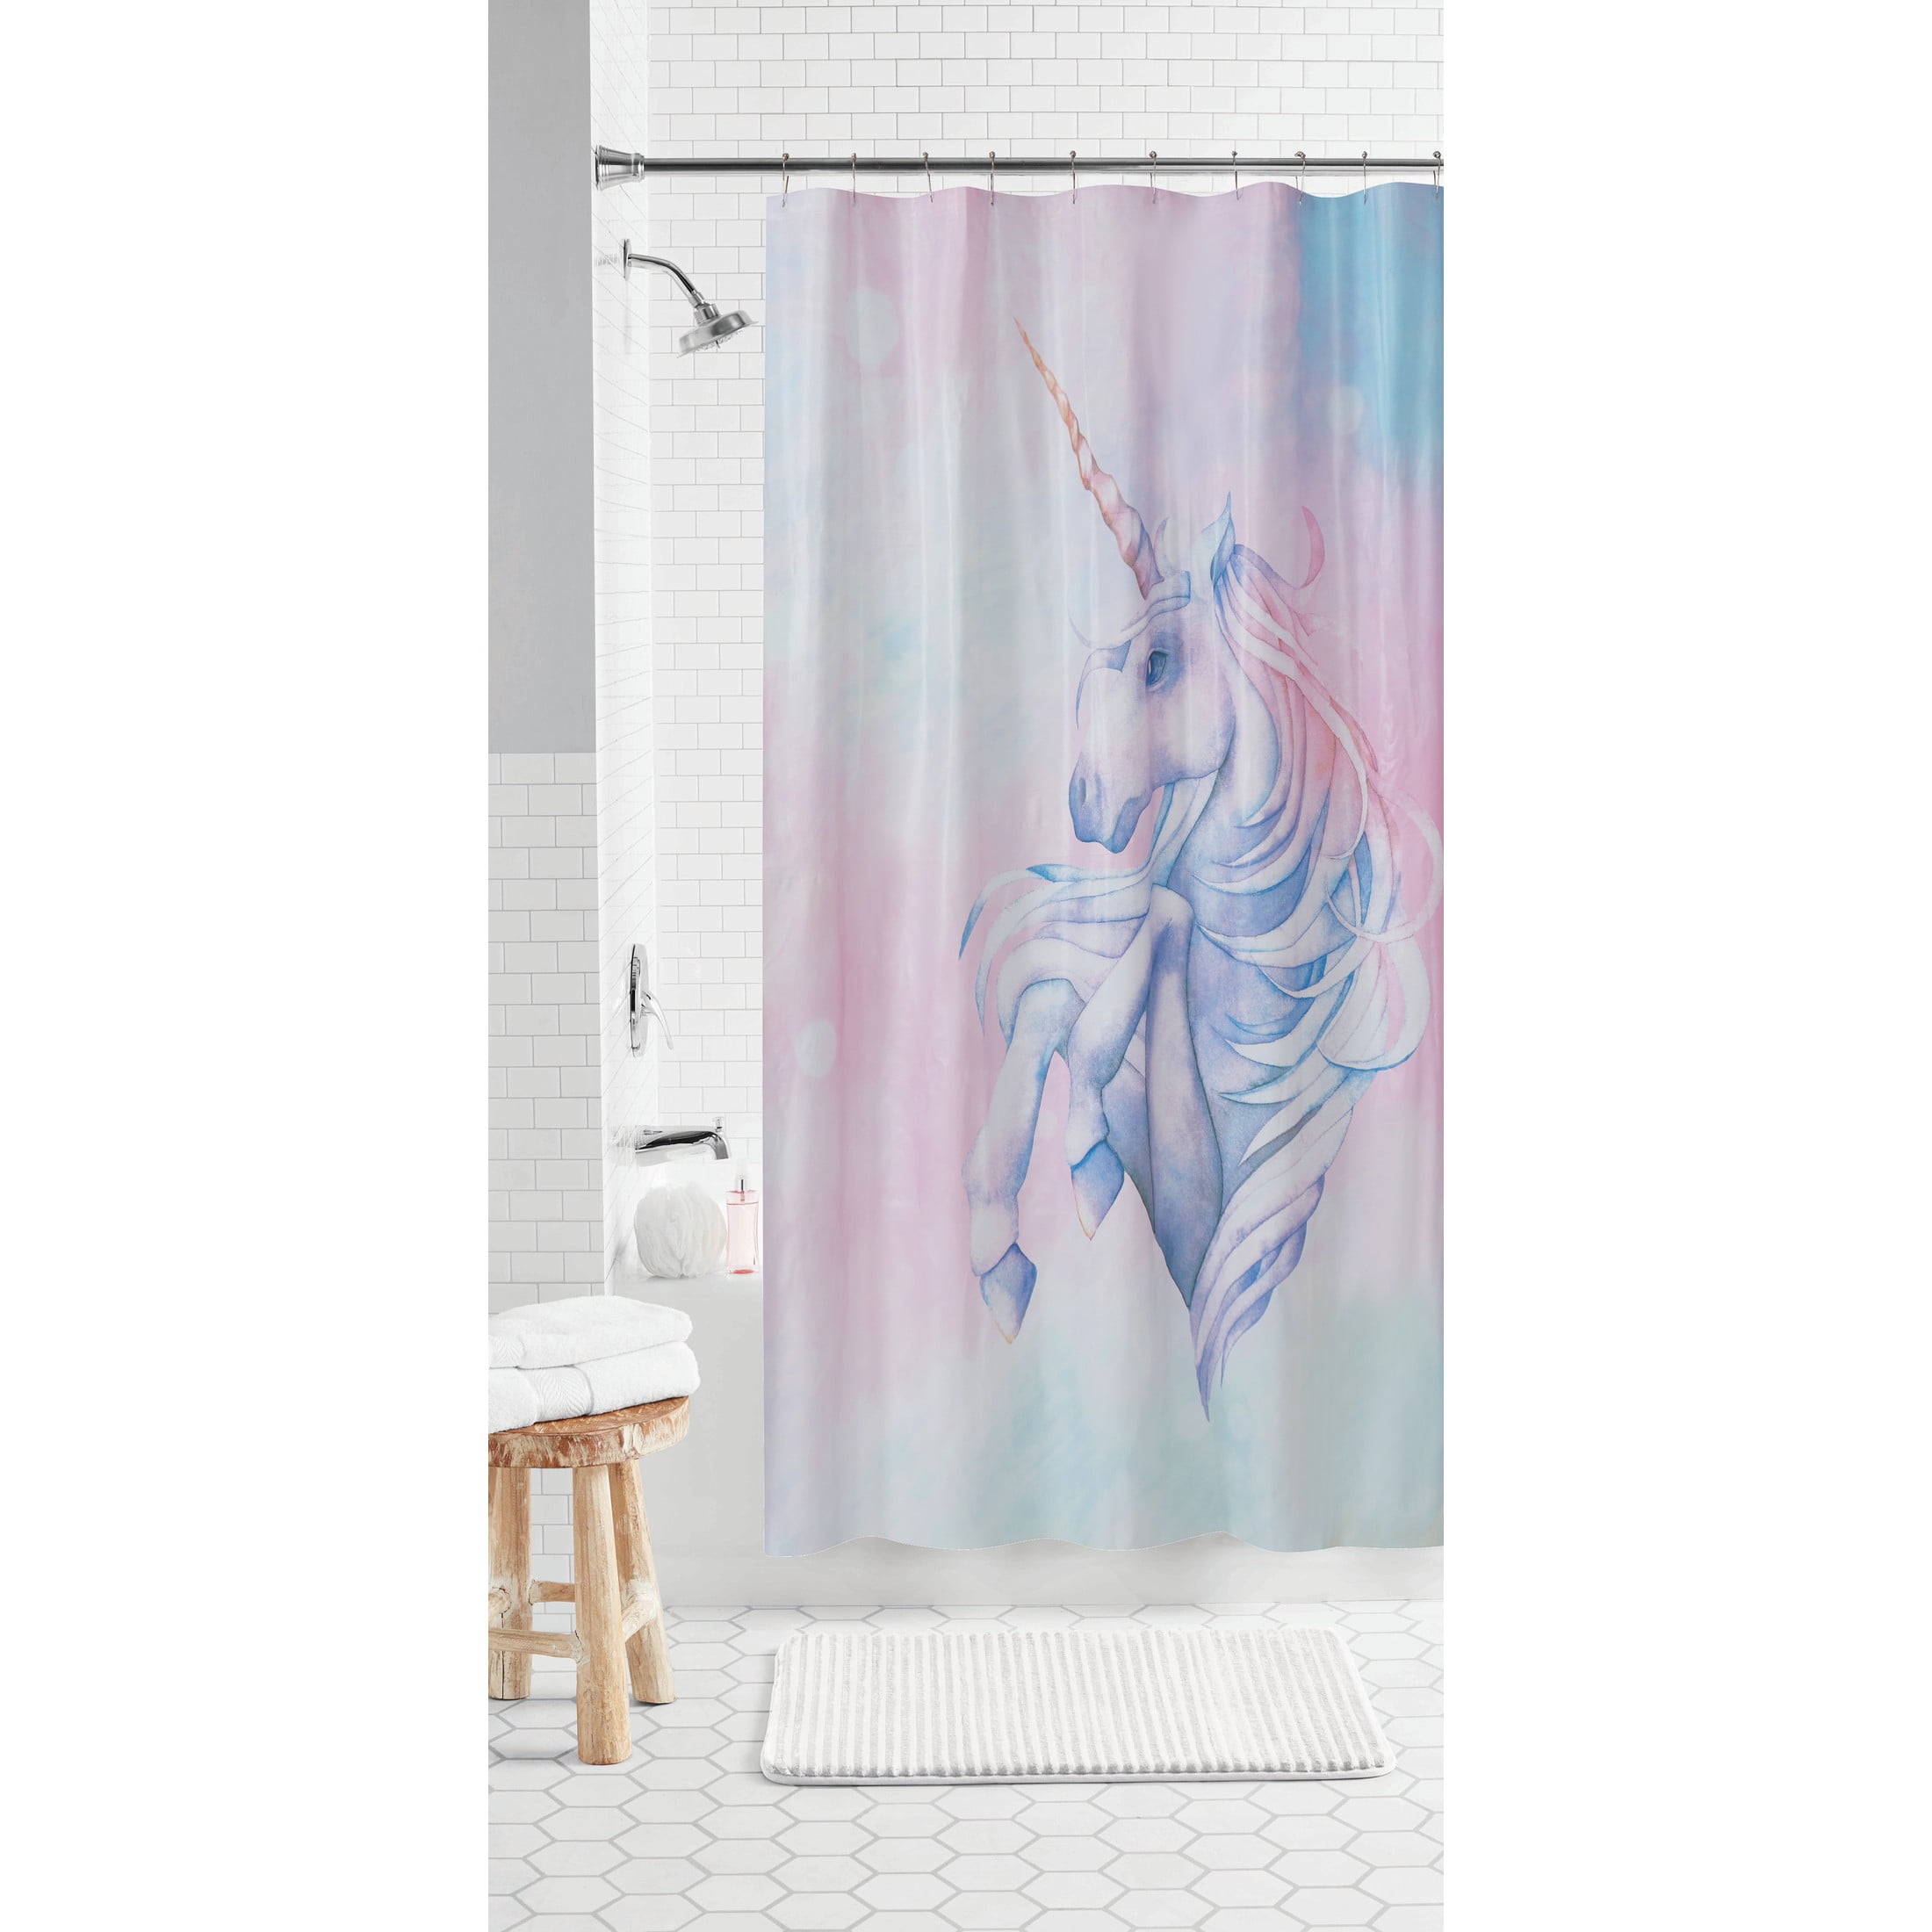 Purple Unicorn PEVA Shower Curtain, Mainstays, 70" x 72"